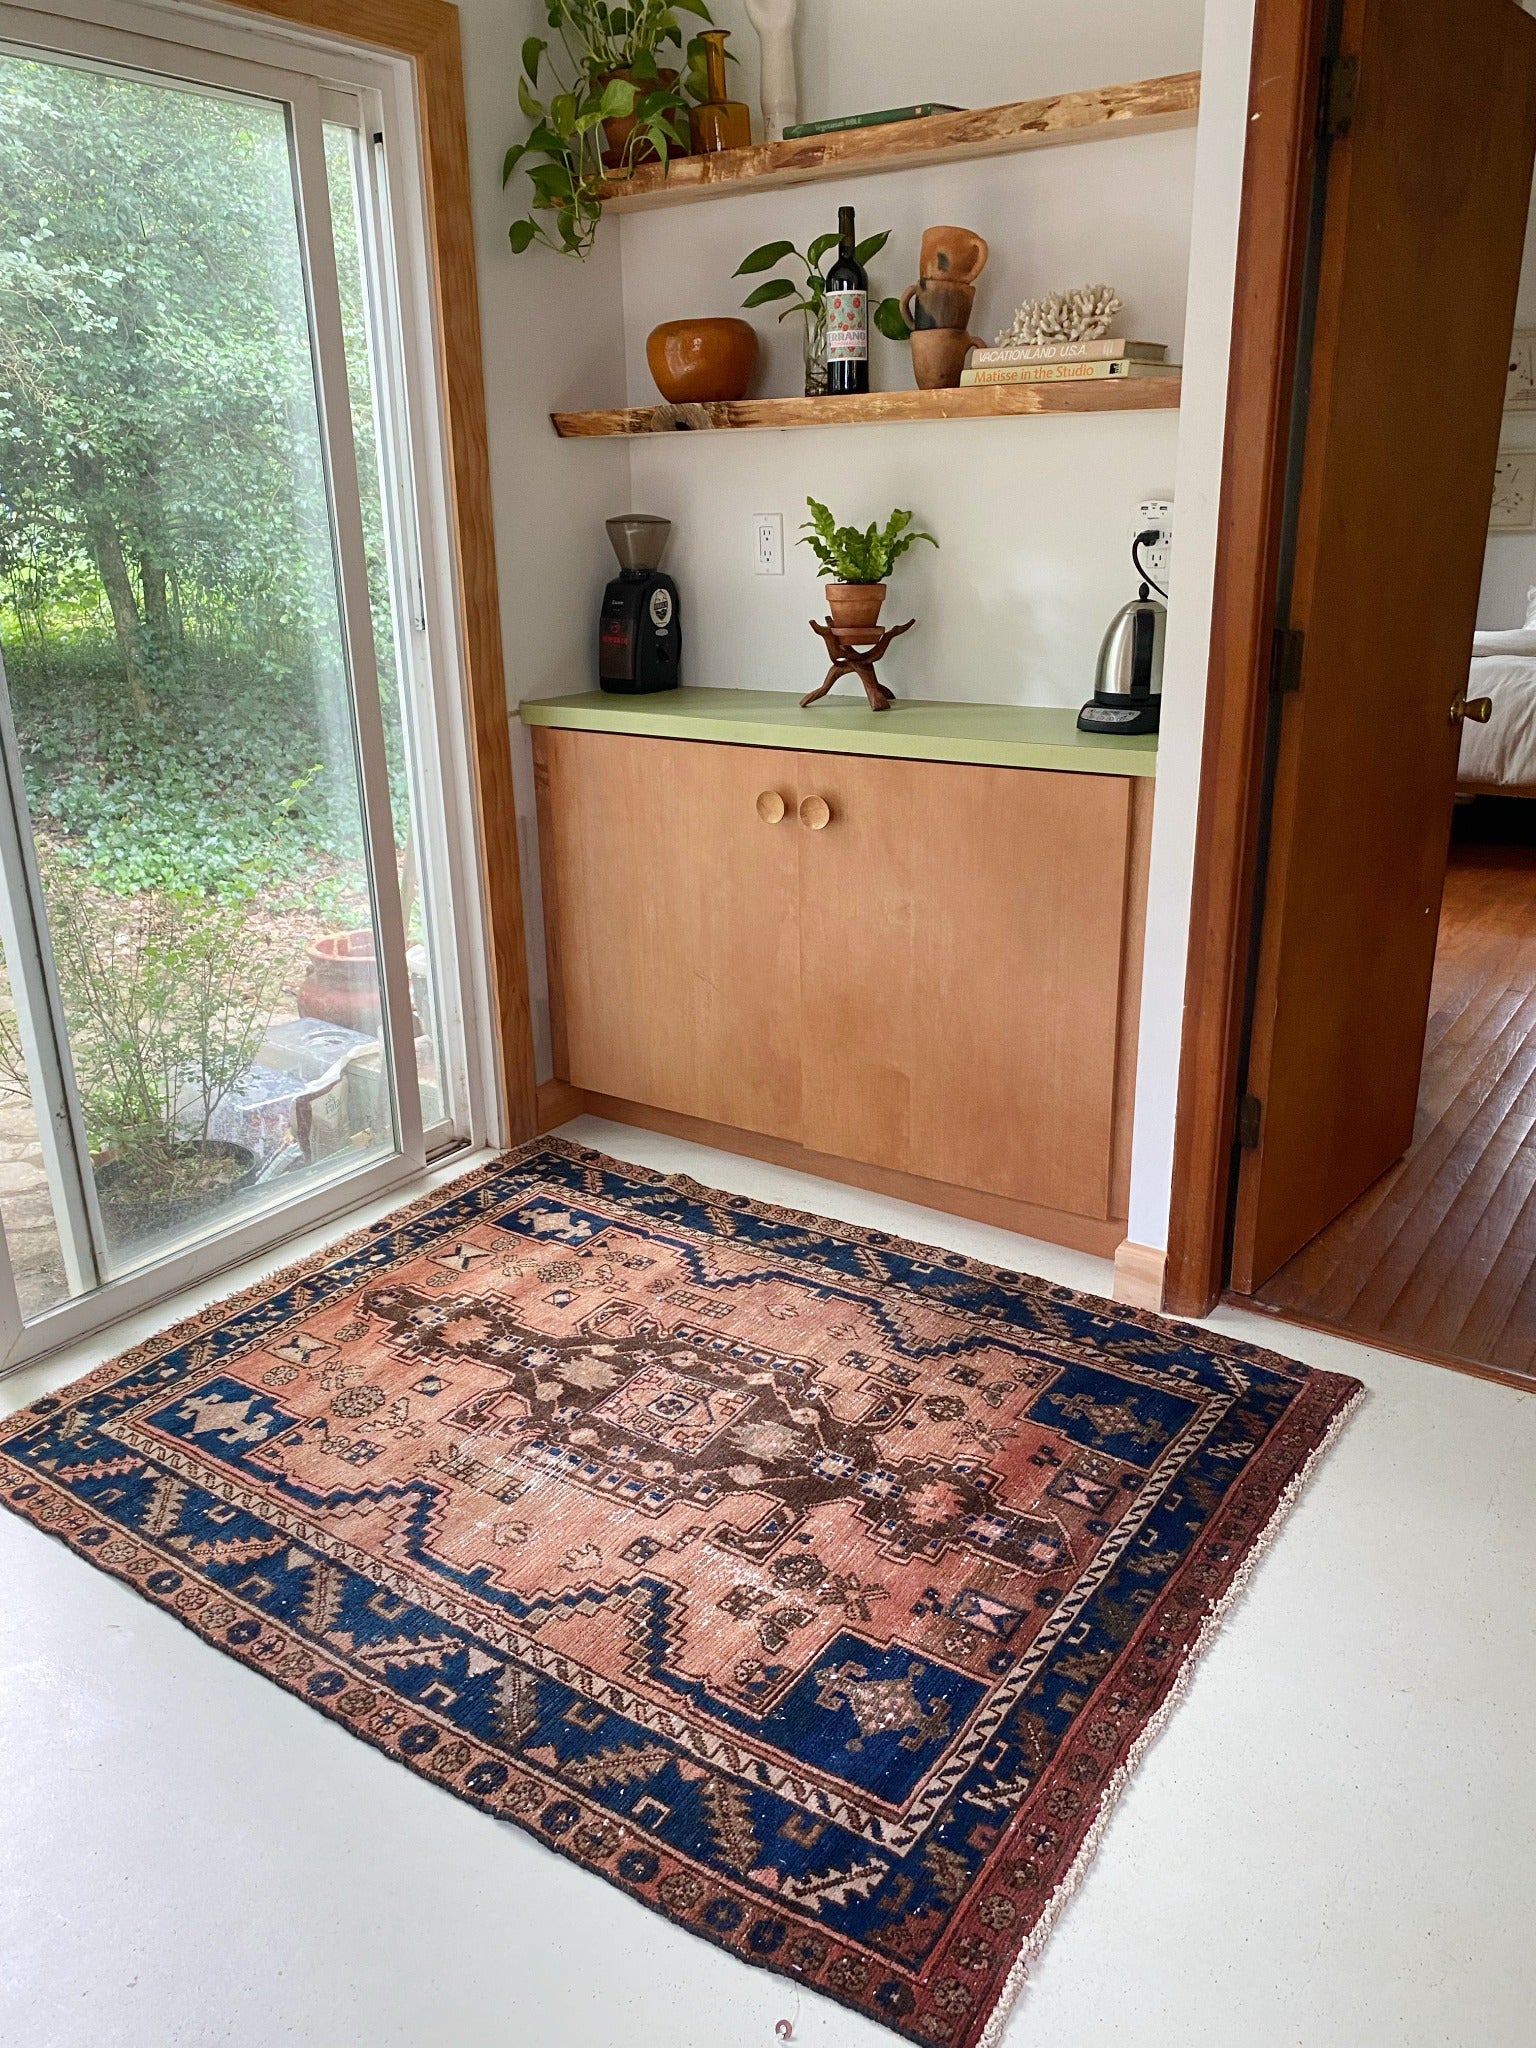 Indigo and peach make this vintage persian rug pop in a modern kitchen.